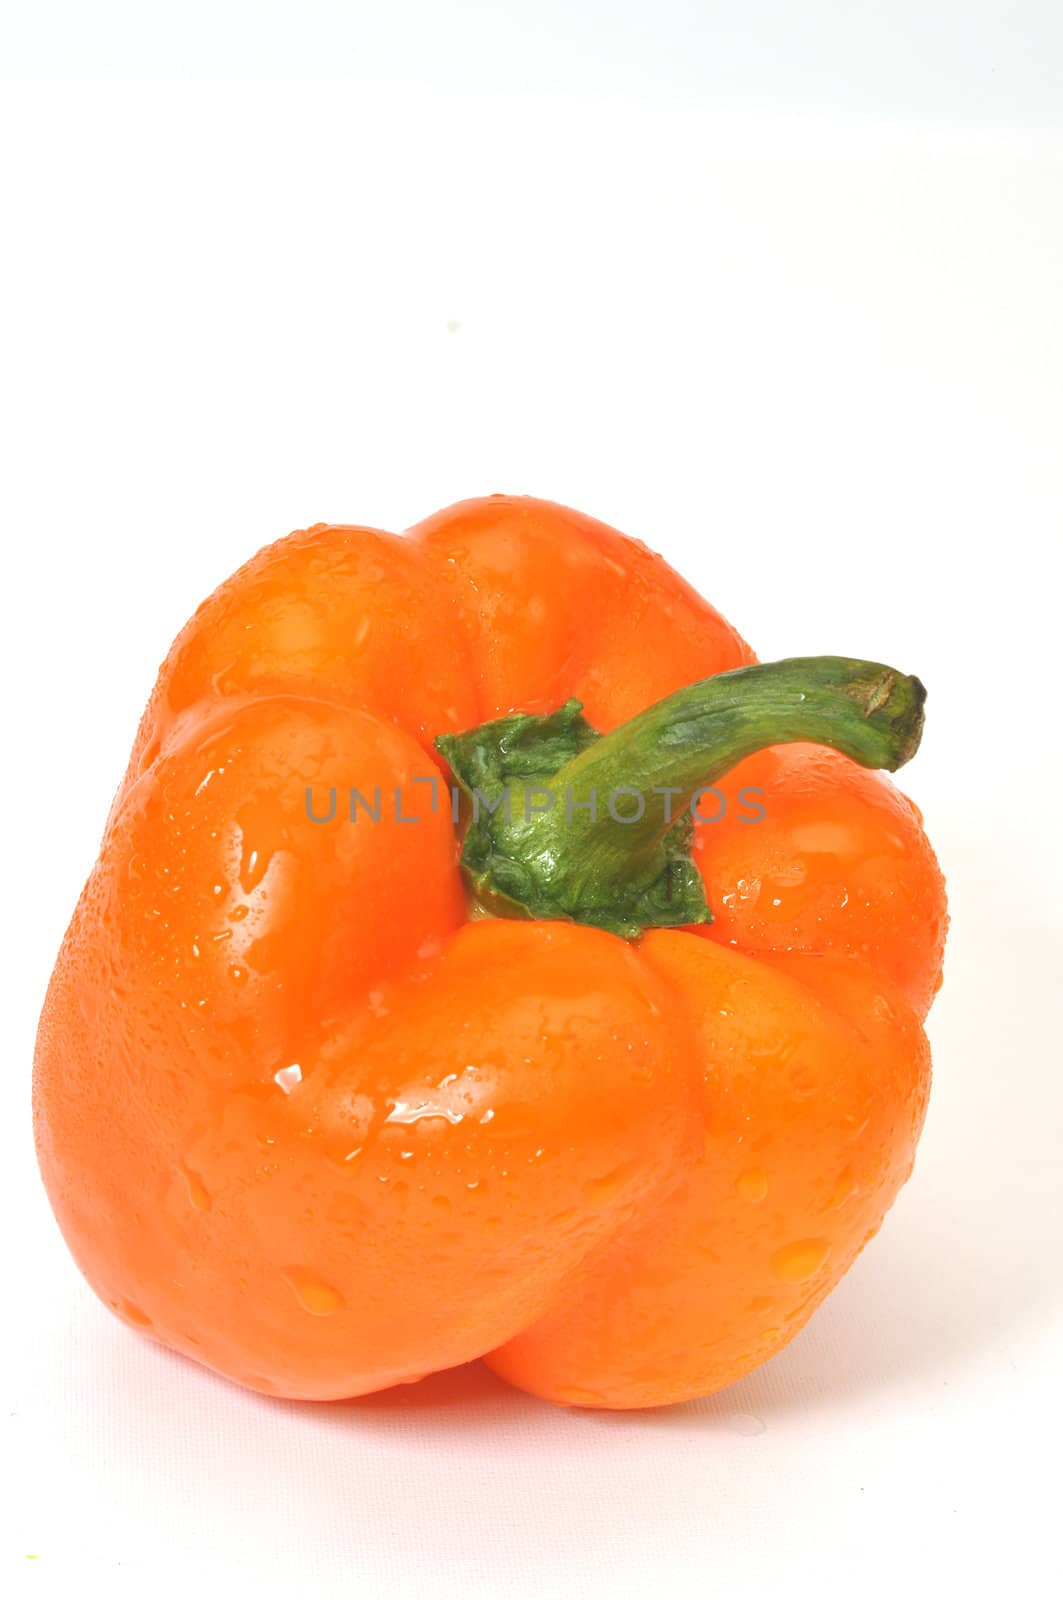 Orange bell pepper isolated on white background.